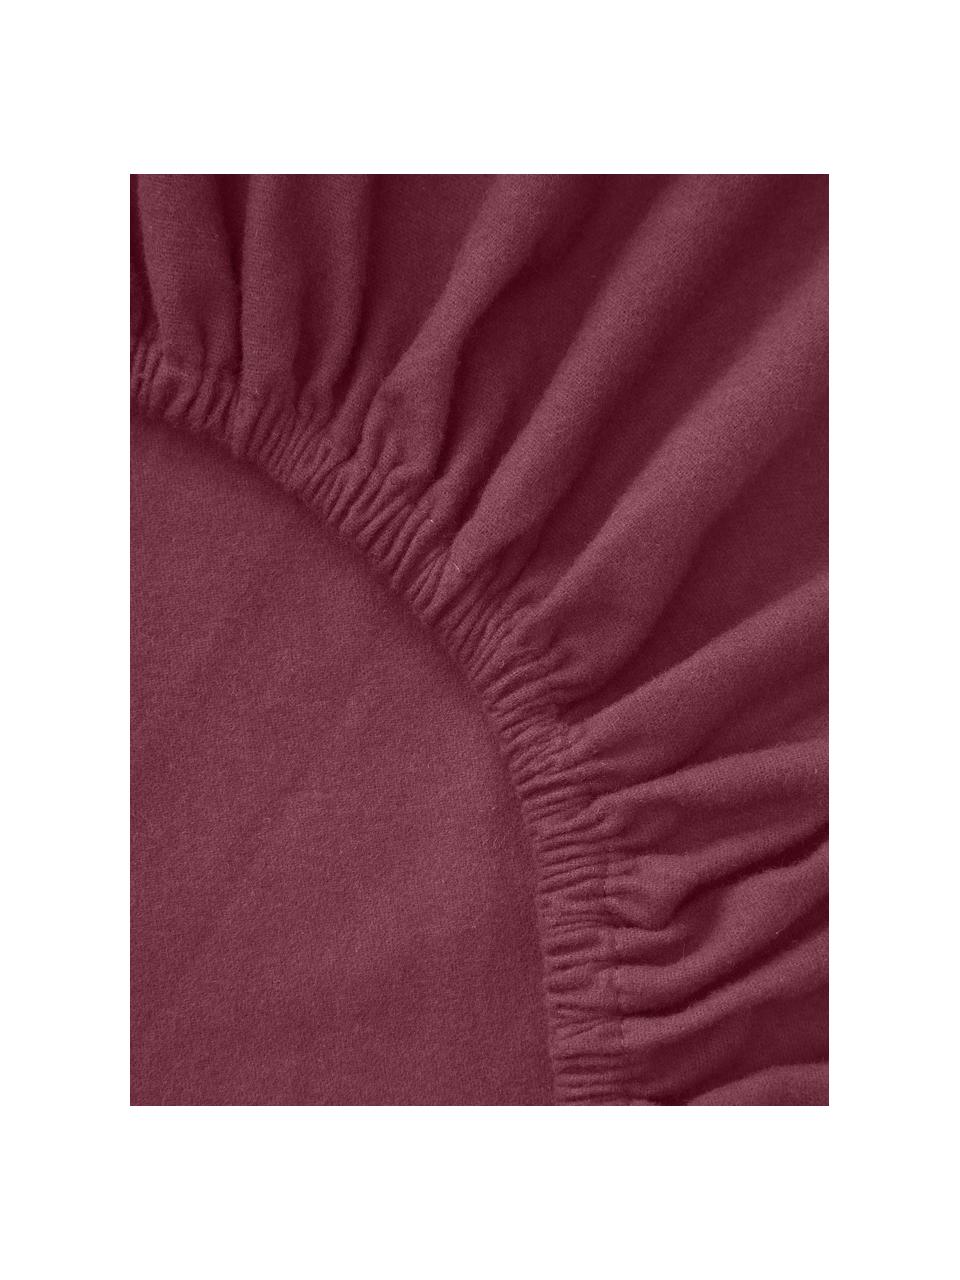 Sábana bajera de franela Biba, Rojo oscuro, Cama 90 cm (90 x 200 x 35 cm)